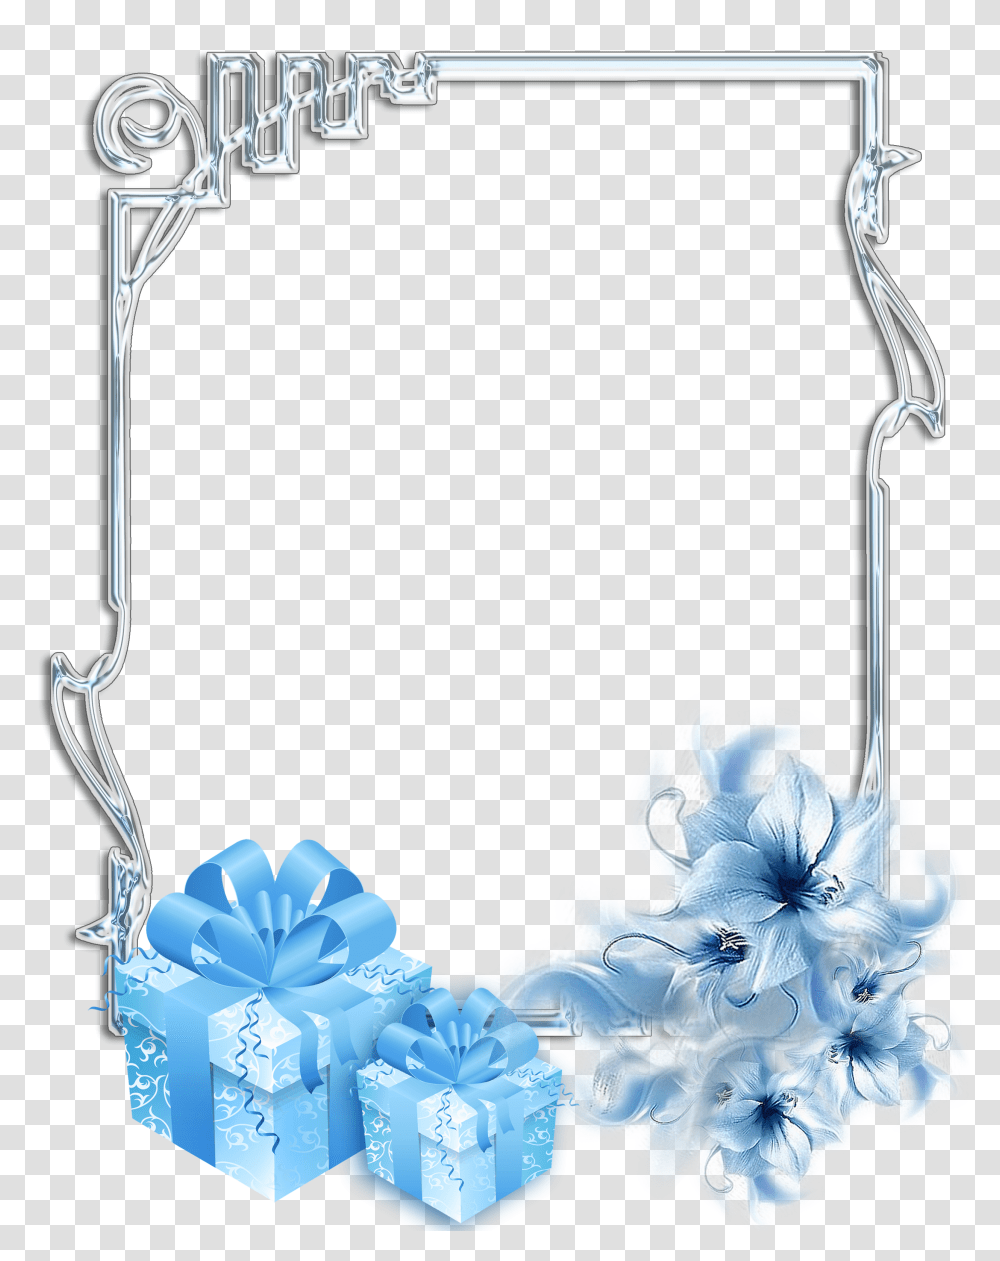 Large Christmas Silver Photo Frame With Blue Christmas Border, Graphics, Art, Construction Crane, Floral Design Transparent Png